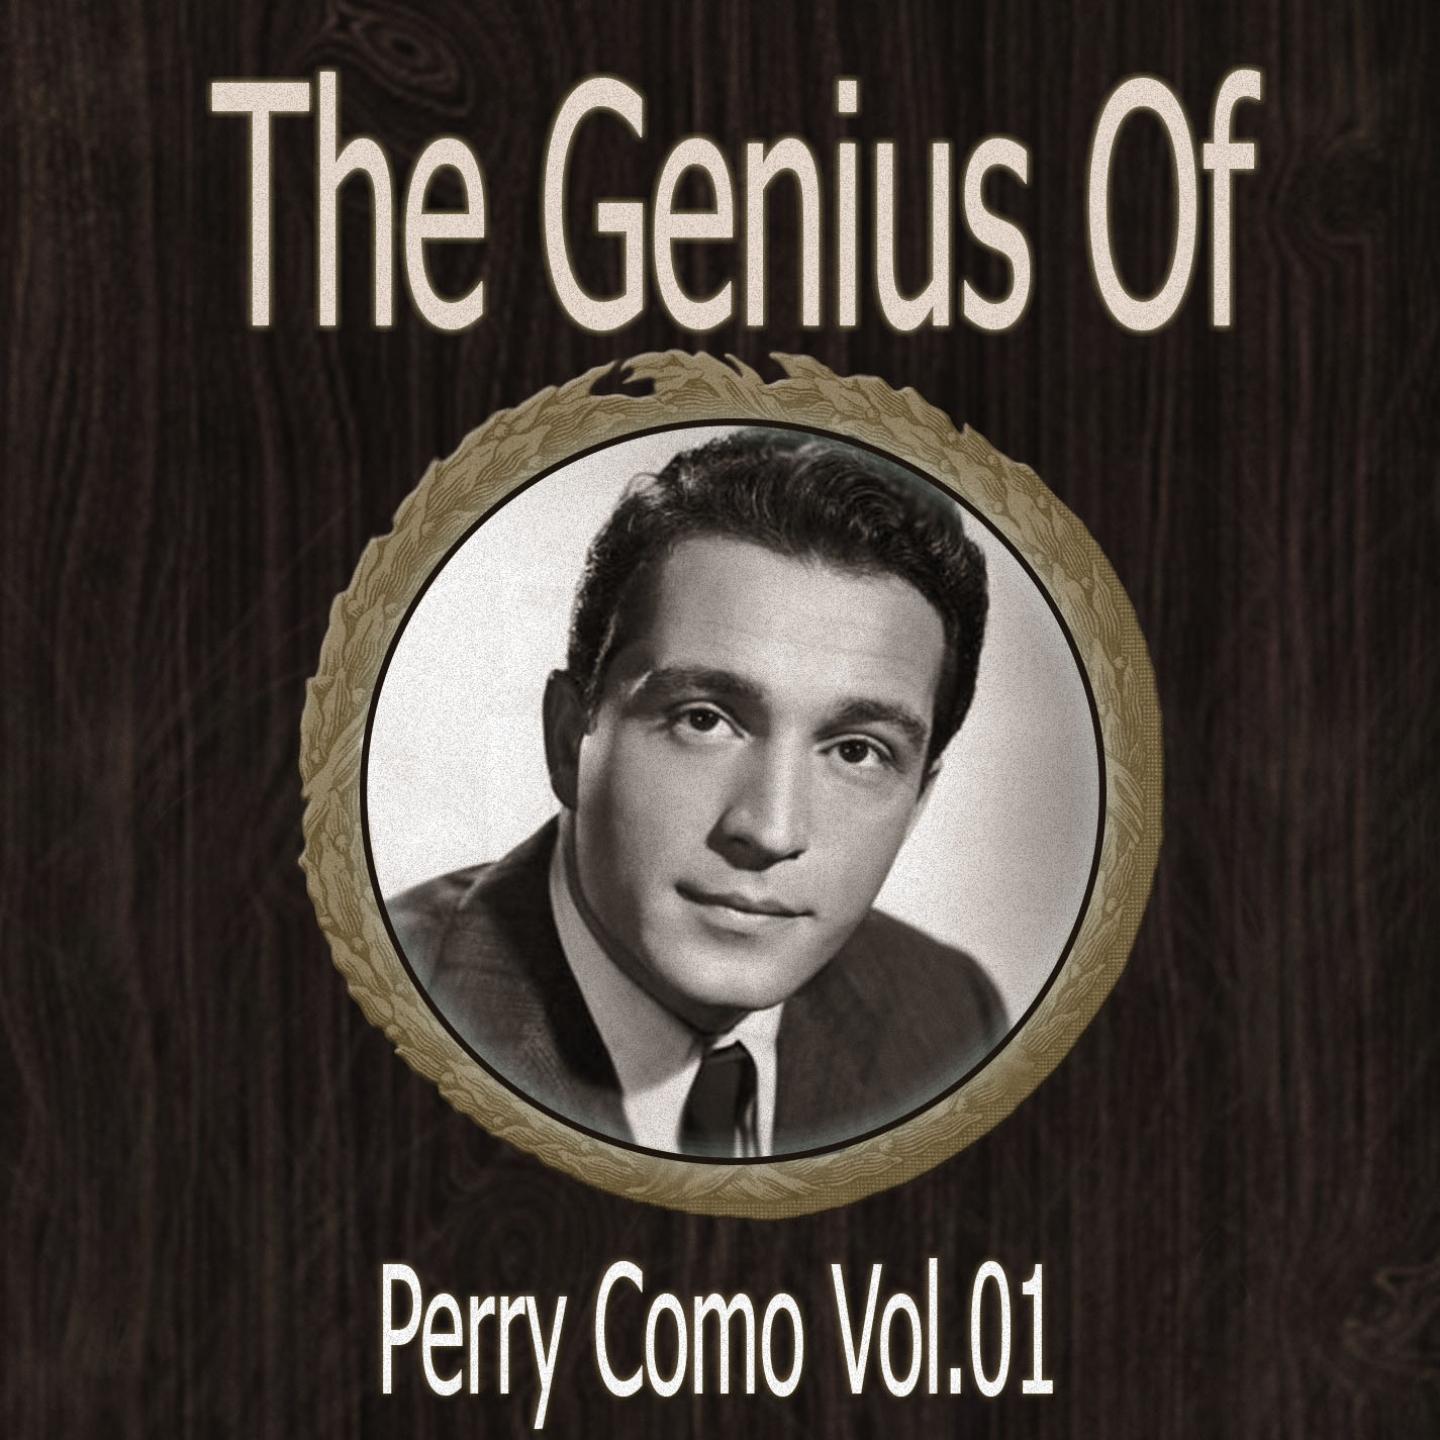 The Genius of Perry Como Vol 01